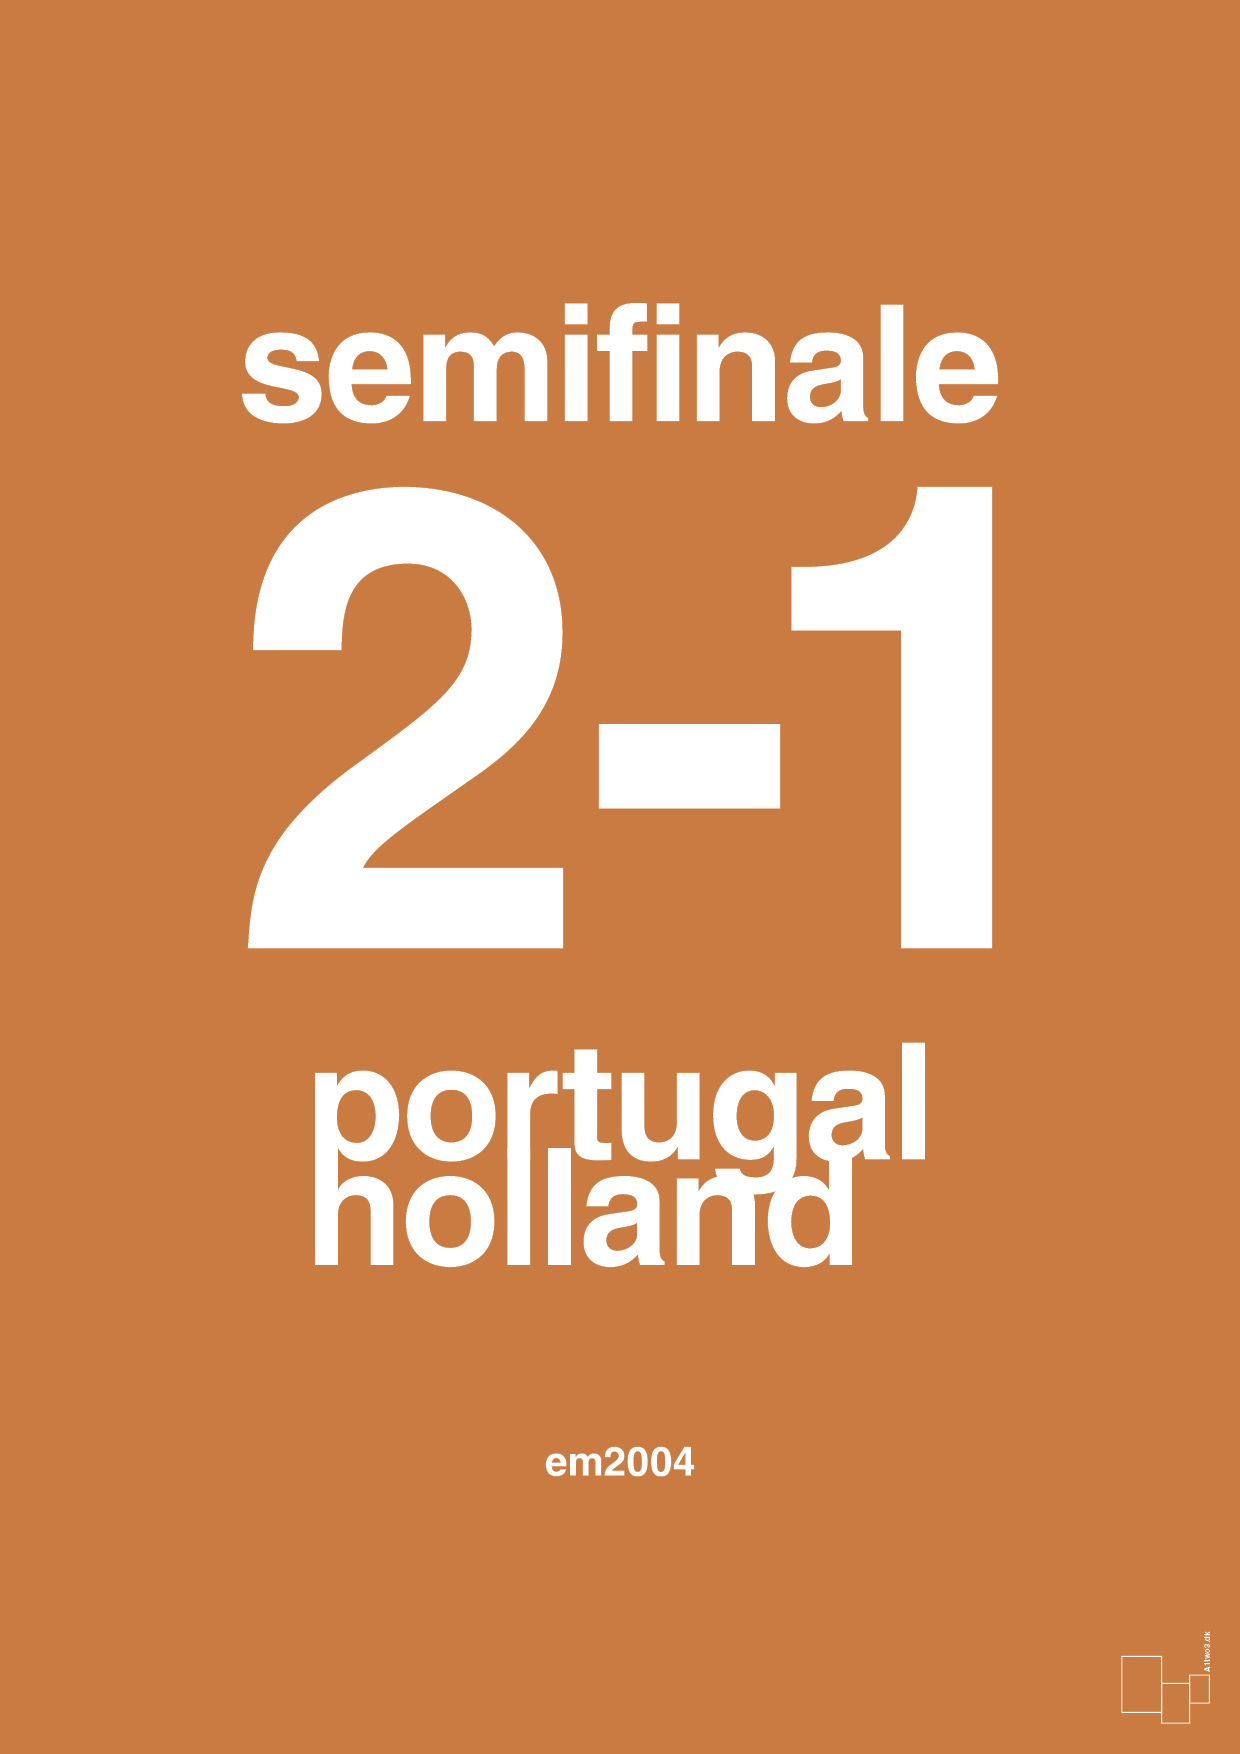 resultat for fodbold em semifinale B i 2004 - Plakat med Sport & Fritid i Rumba Orange